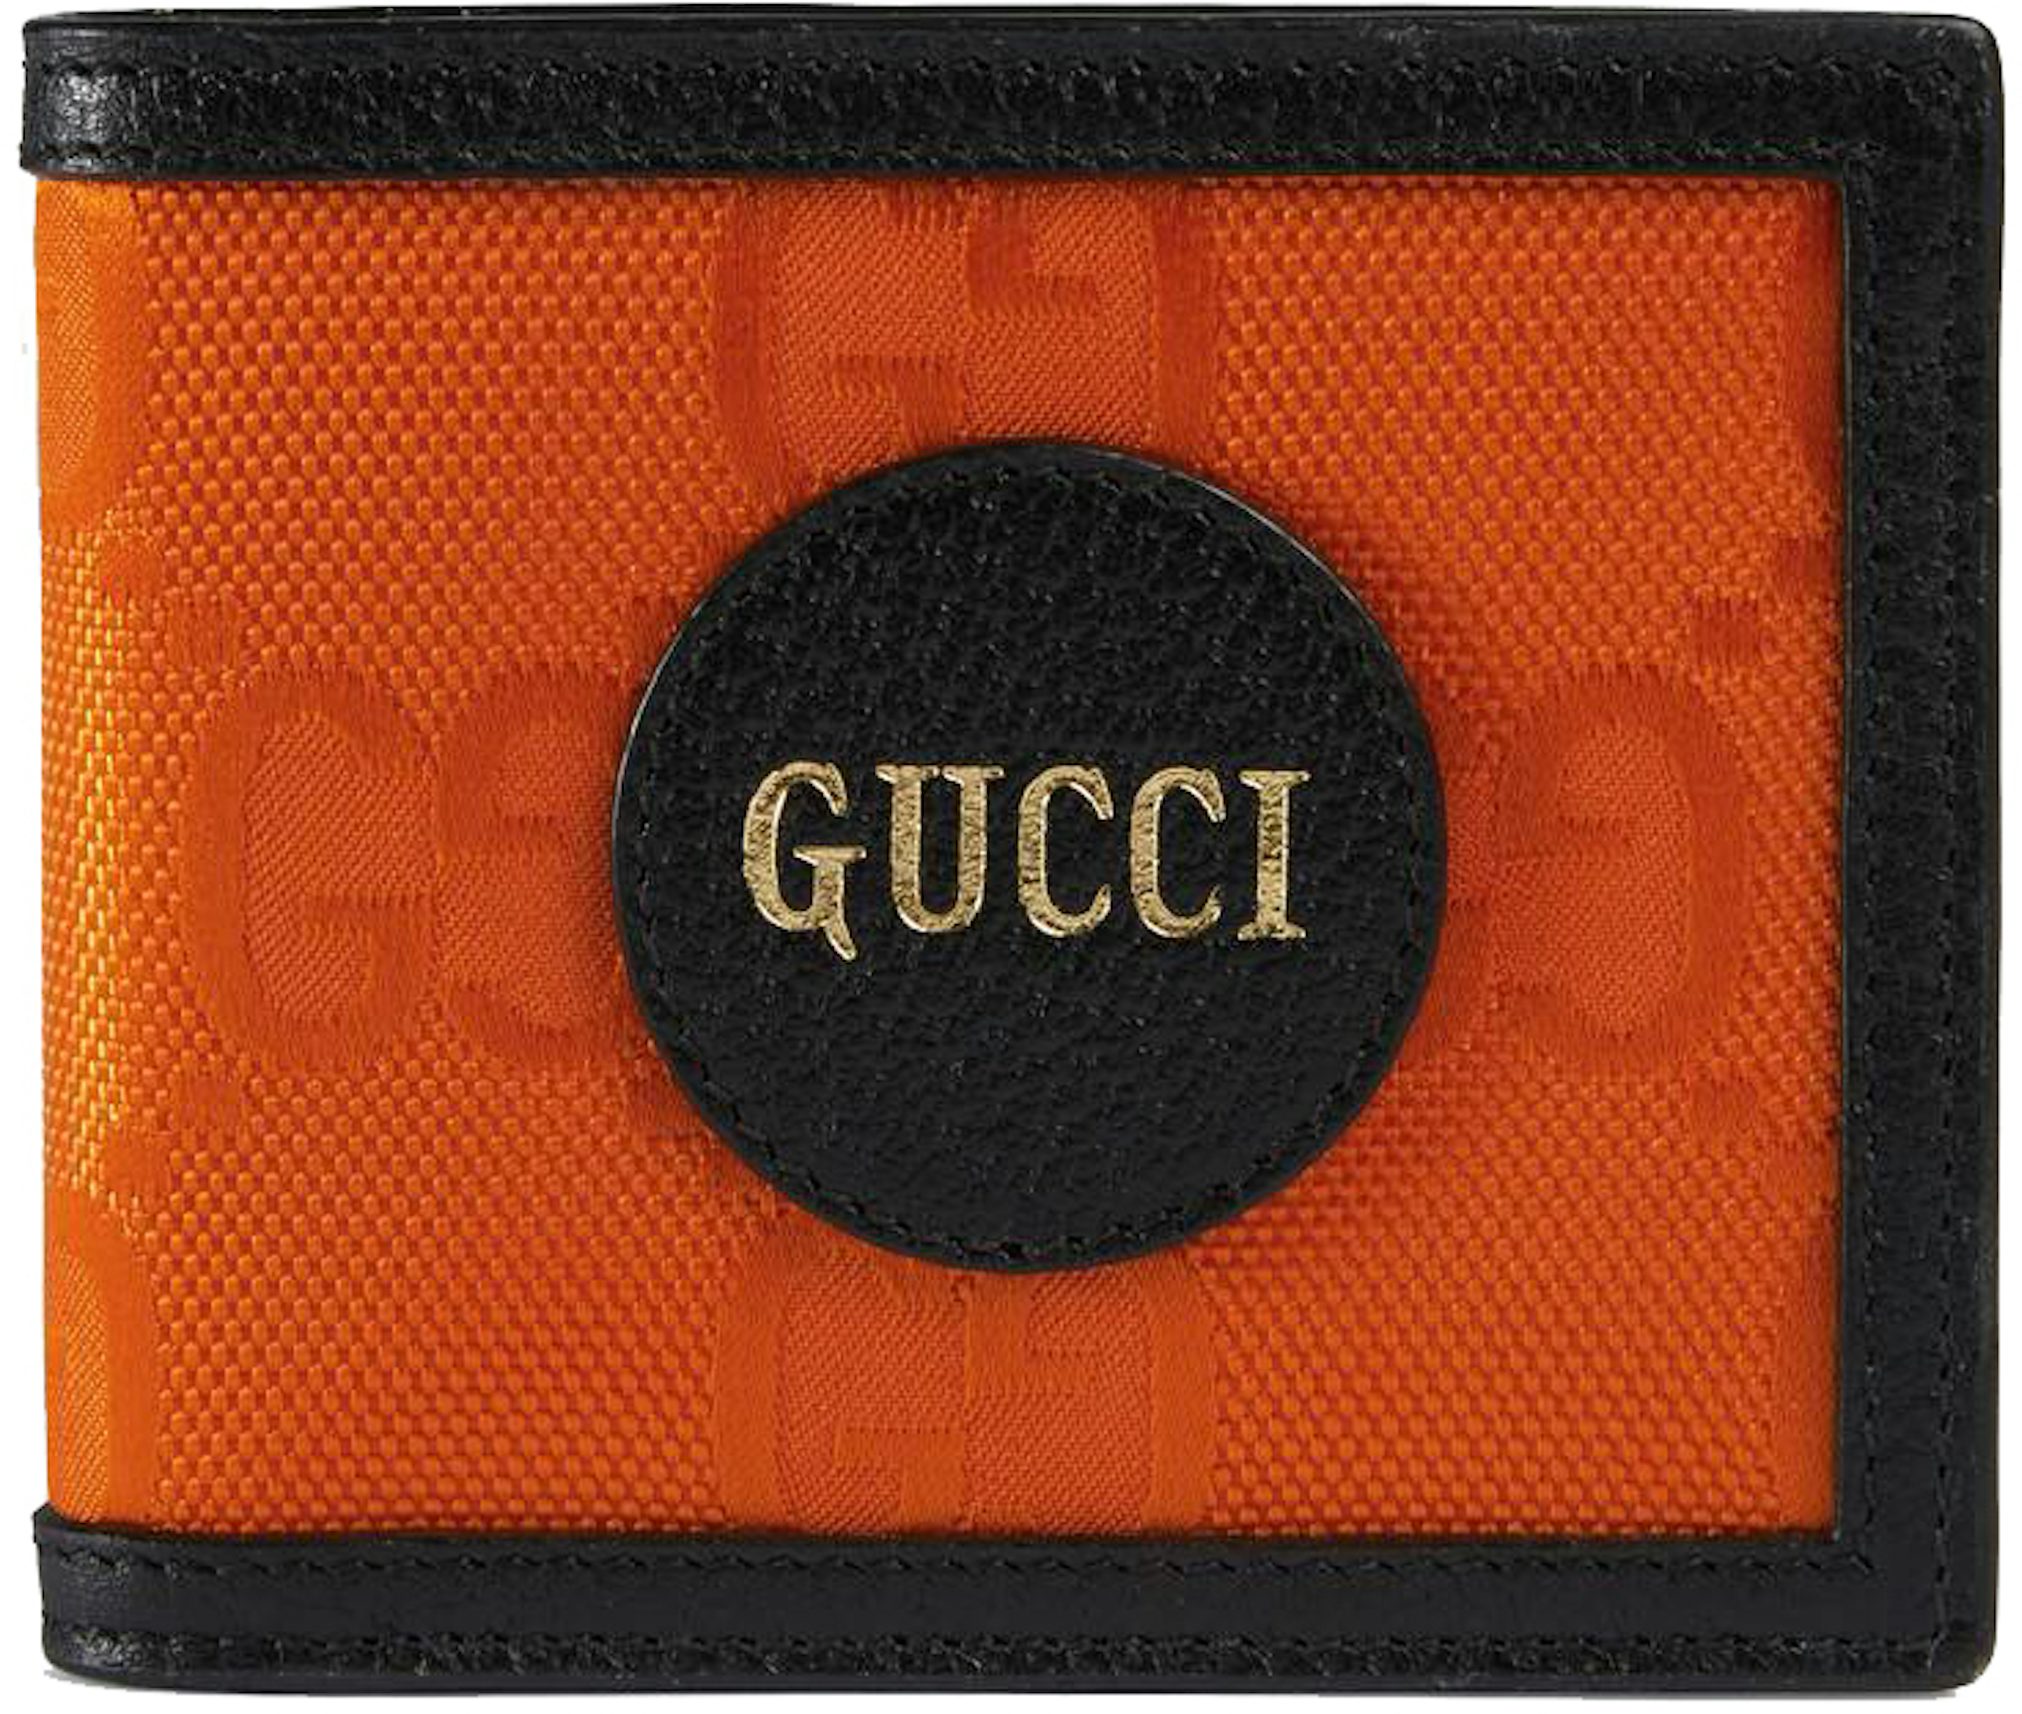 Gucci Off The Grid Billfold Wallet Orange in Econyl Nylon - US